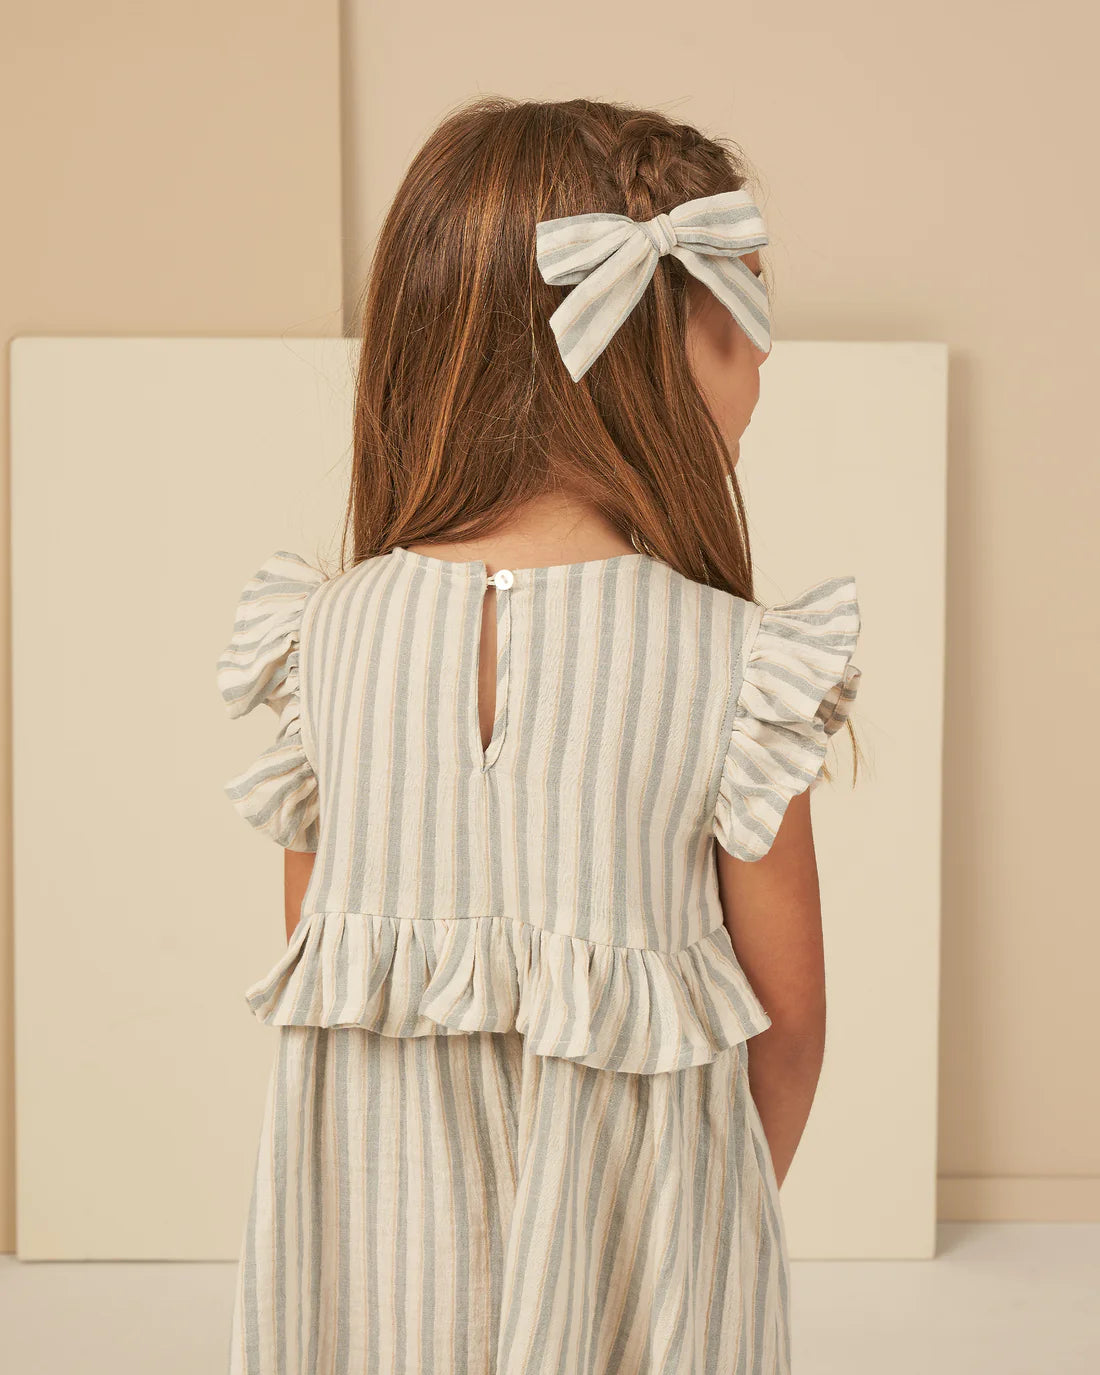 Hair Bow in Ocean Stripe  - Doodlebug's Children's Boutique